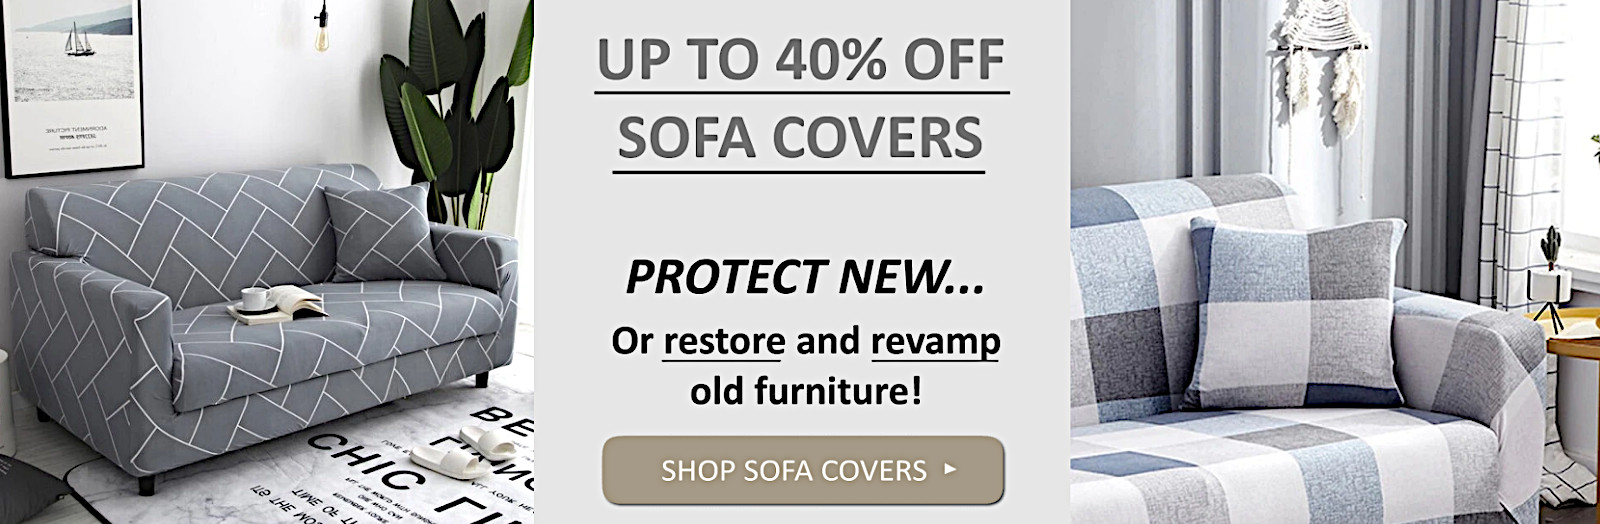 Cheap Price sofa covers